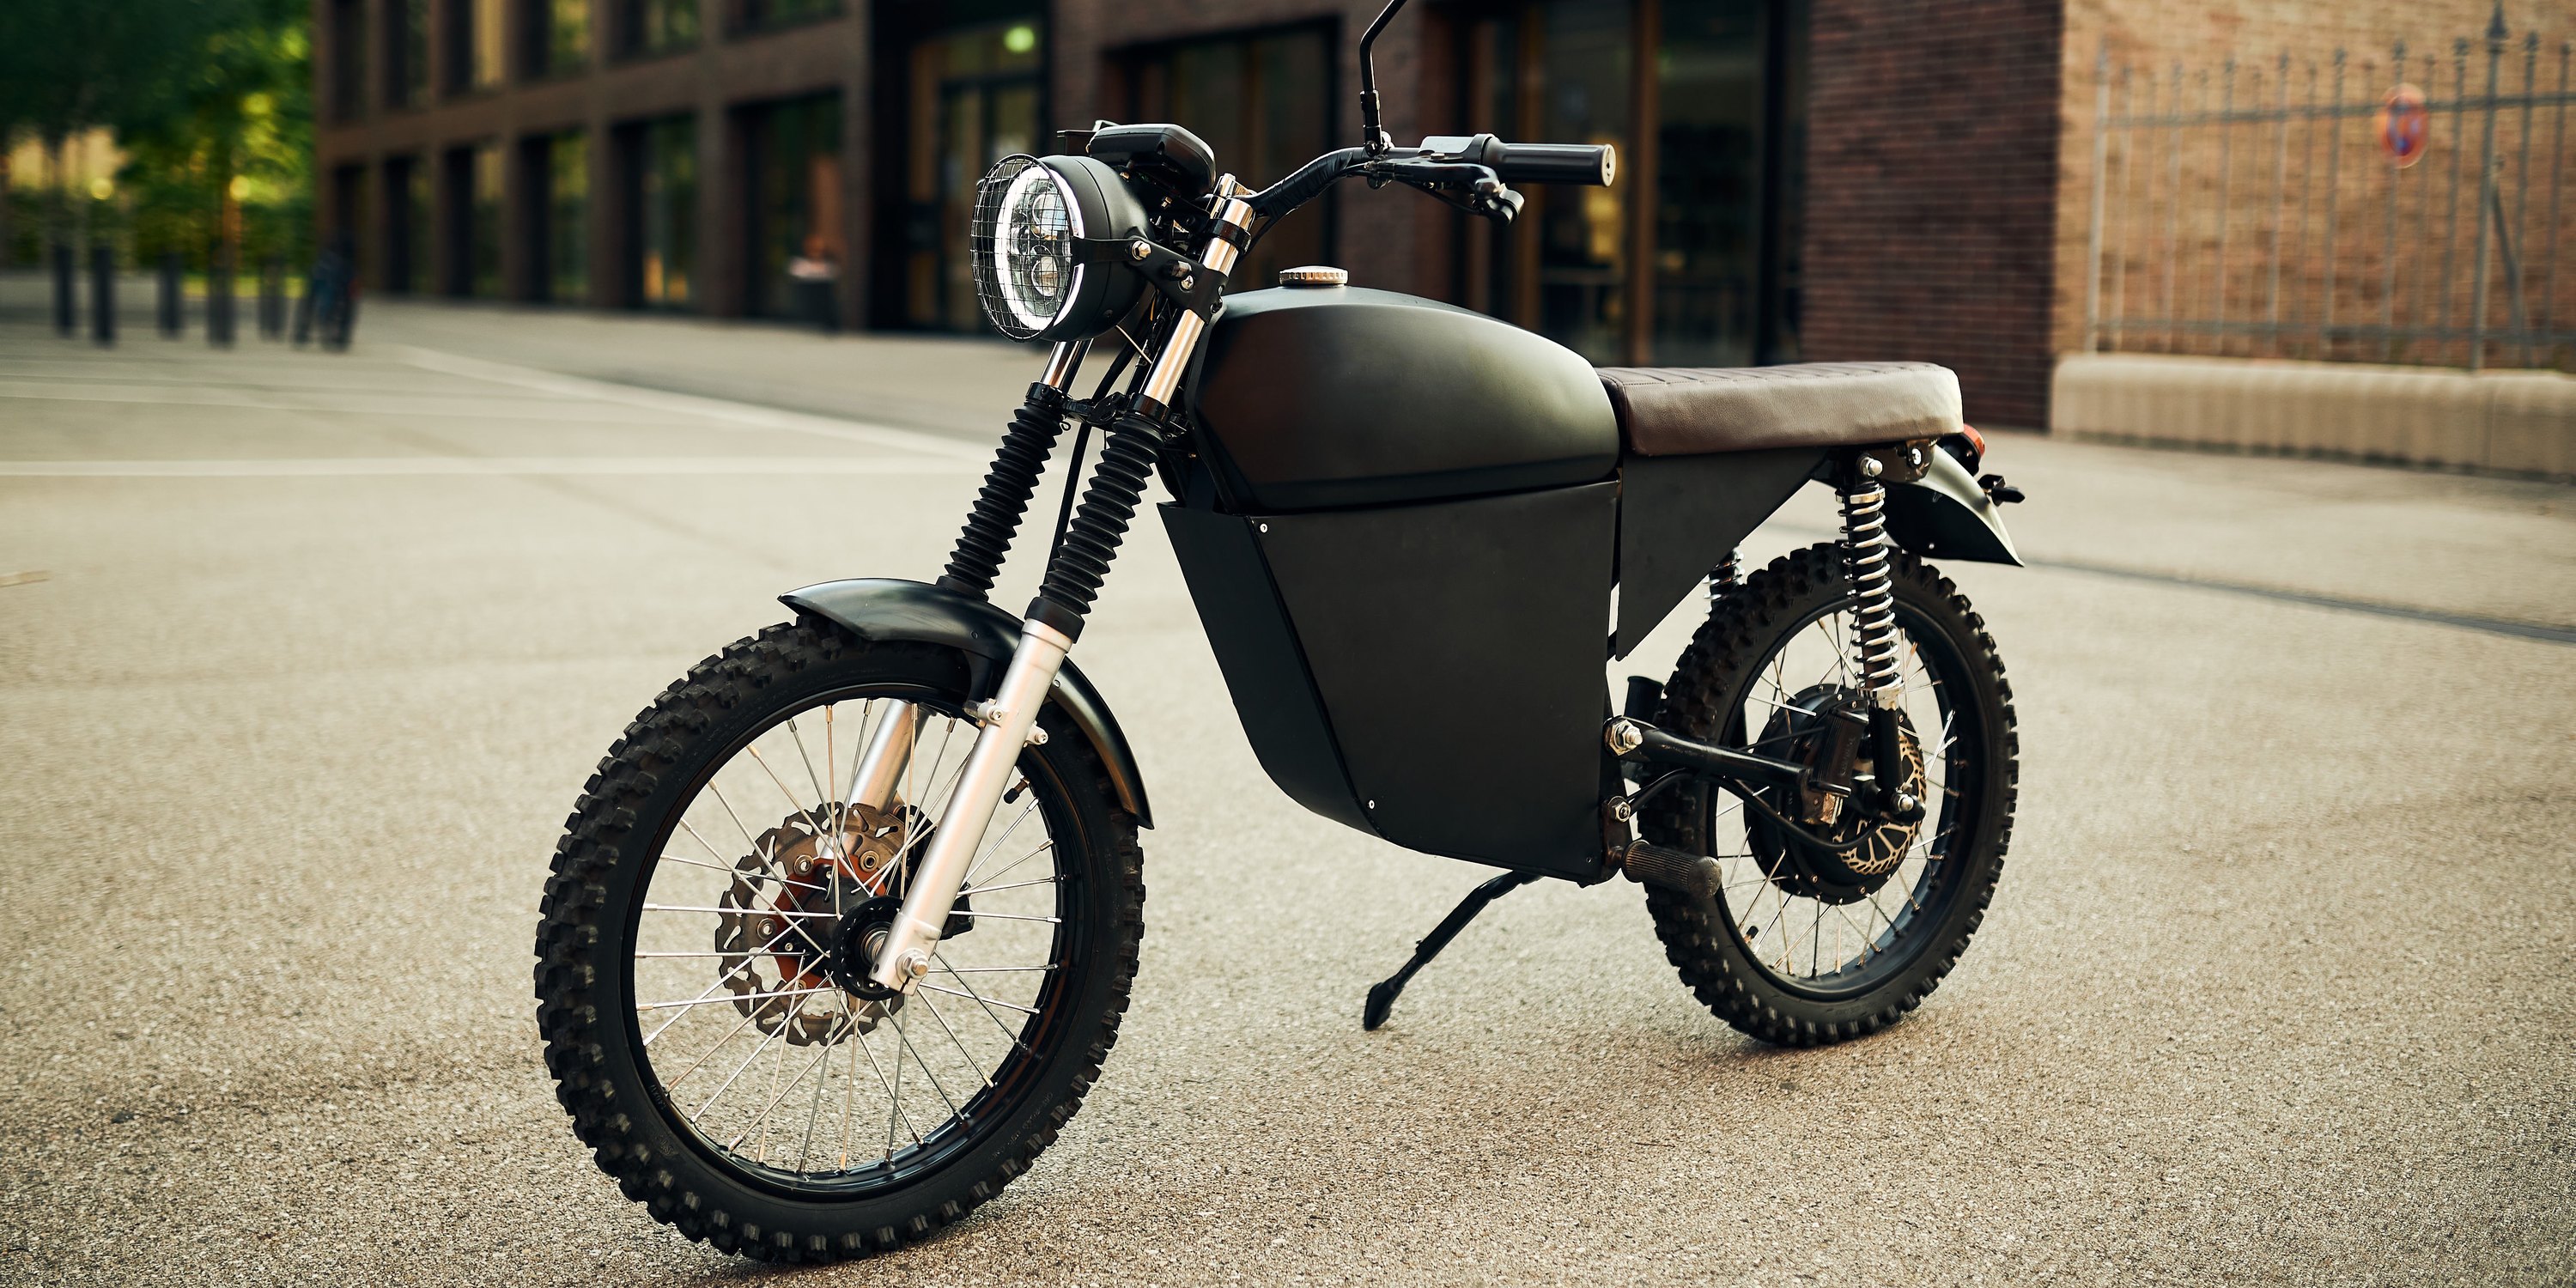 BlackTea Moped offers 50 MPH electric motorbike as cheap as a gas bike